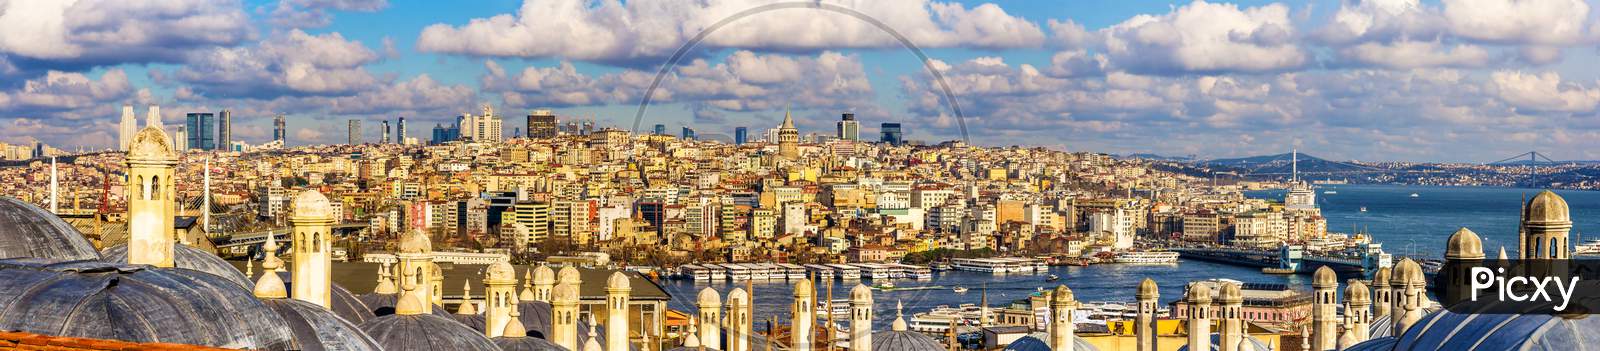 Panorama Of Istanbul From The Sueymaniye Mosque - Turkey